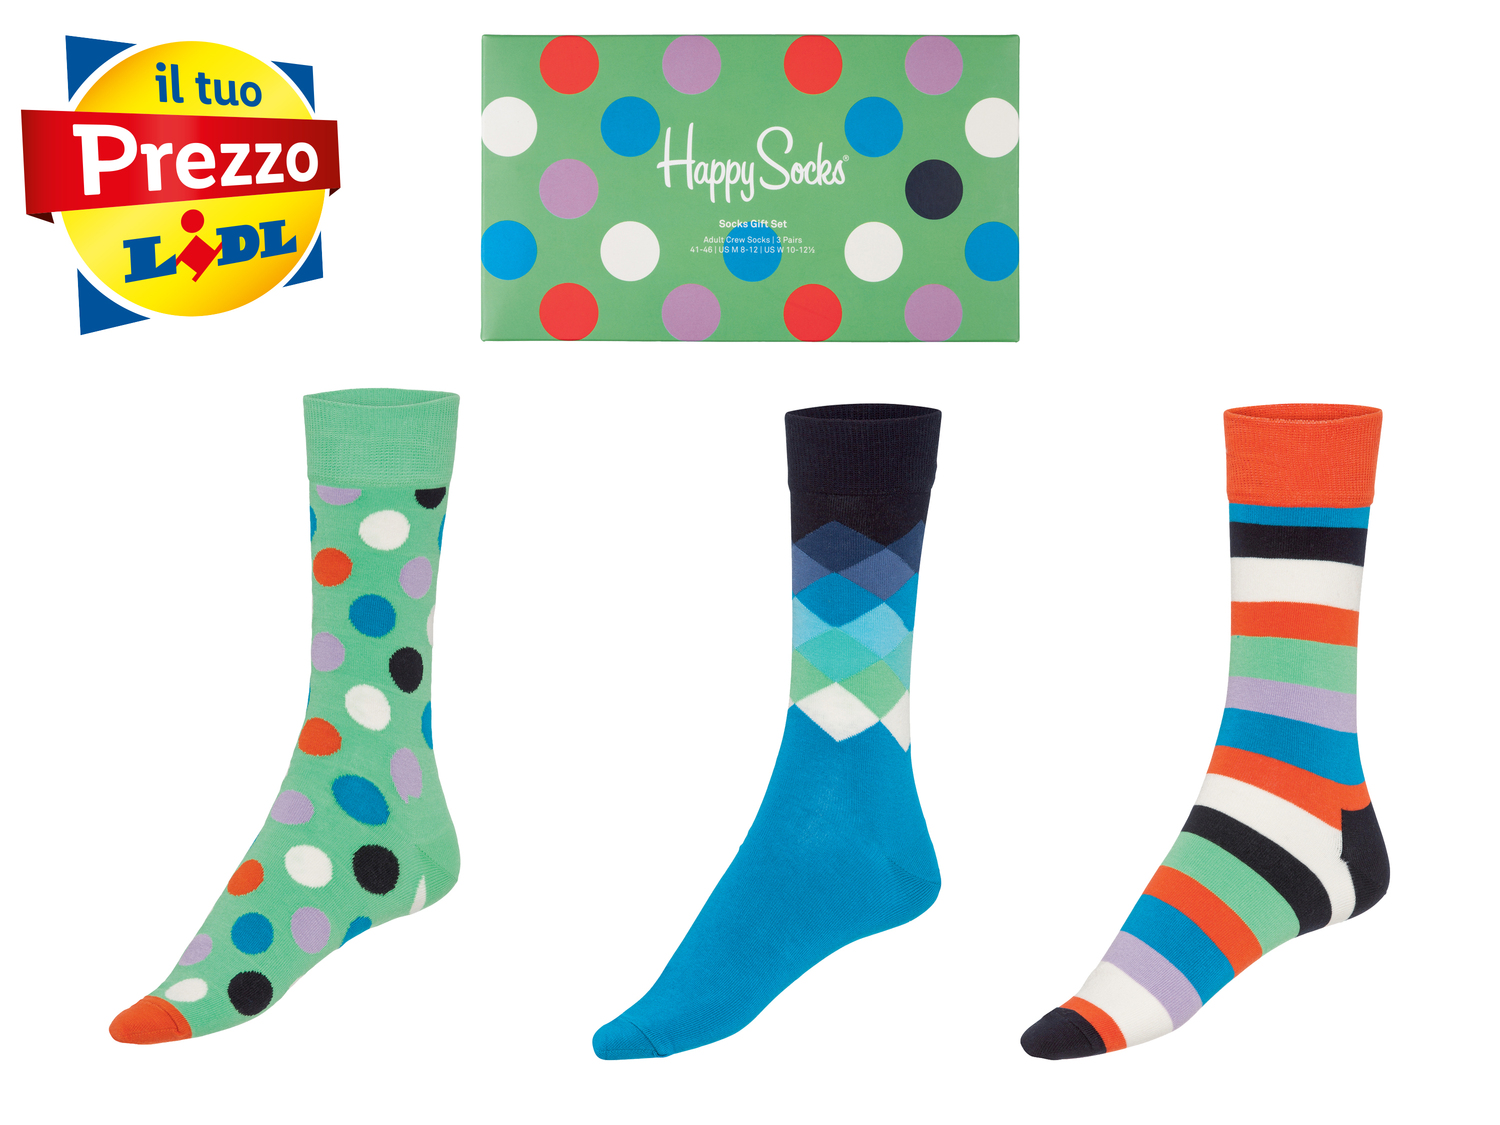 Calze Happy Socks Happy-socks, prezzo 14.99 € 
3 paia - Misure: 36-46
Taglie ...